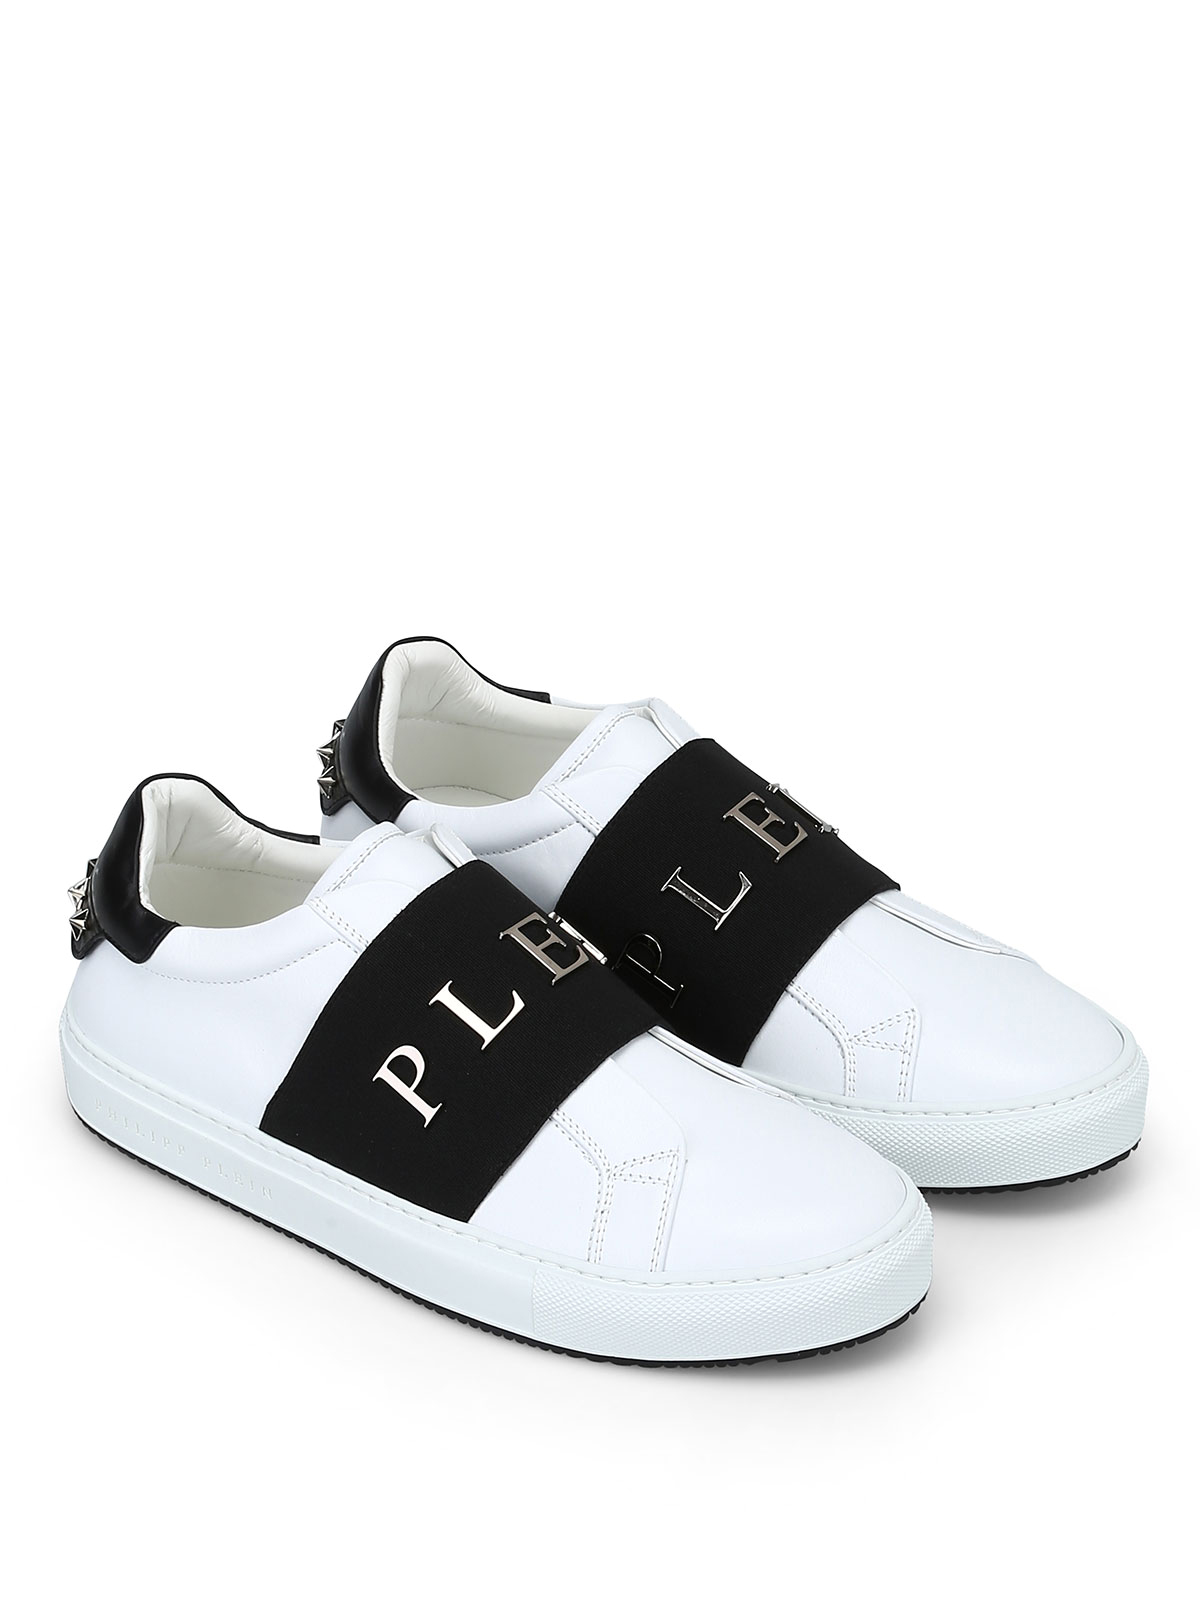 philipp plein trainers white